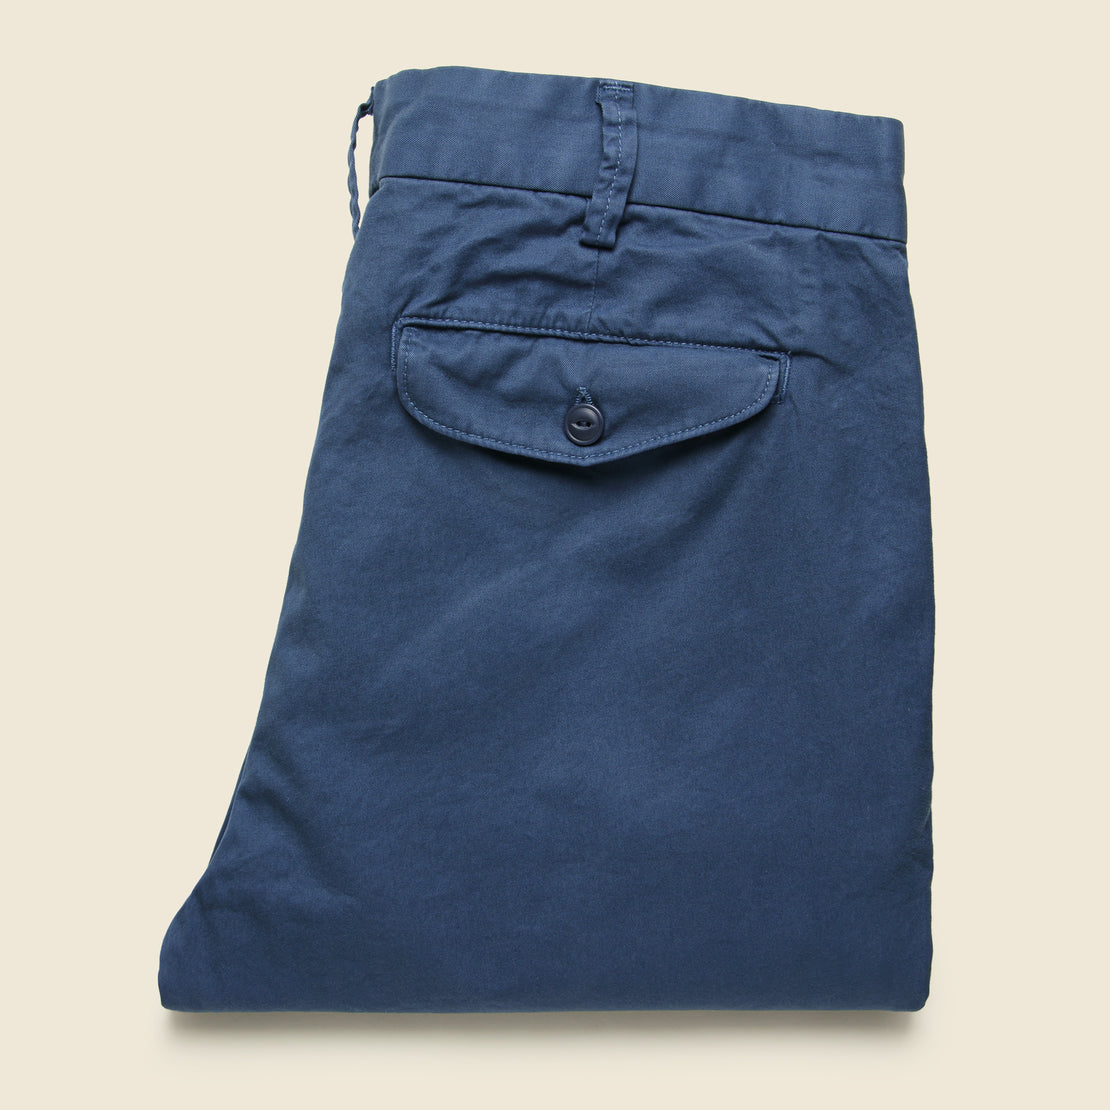 Light Twill Trouser - Blue - Save Khaki - STAG Provisions - Pants - Twill